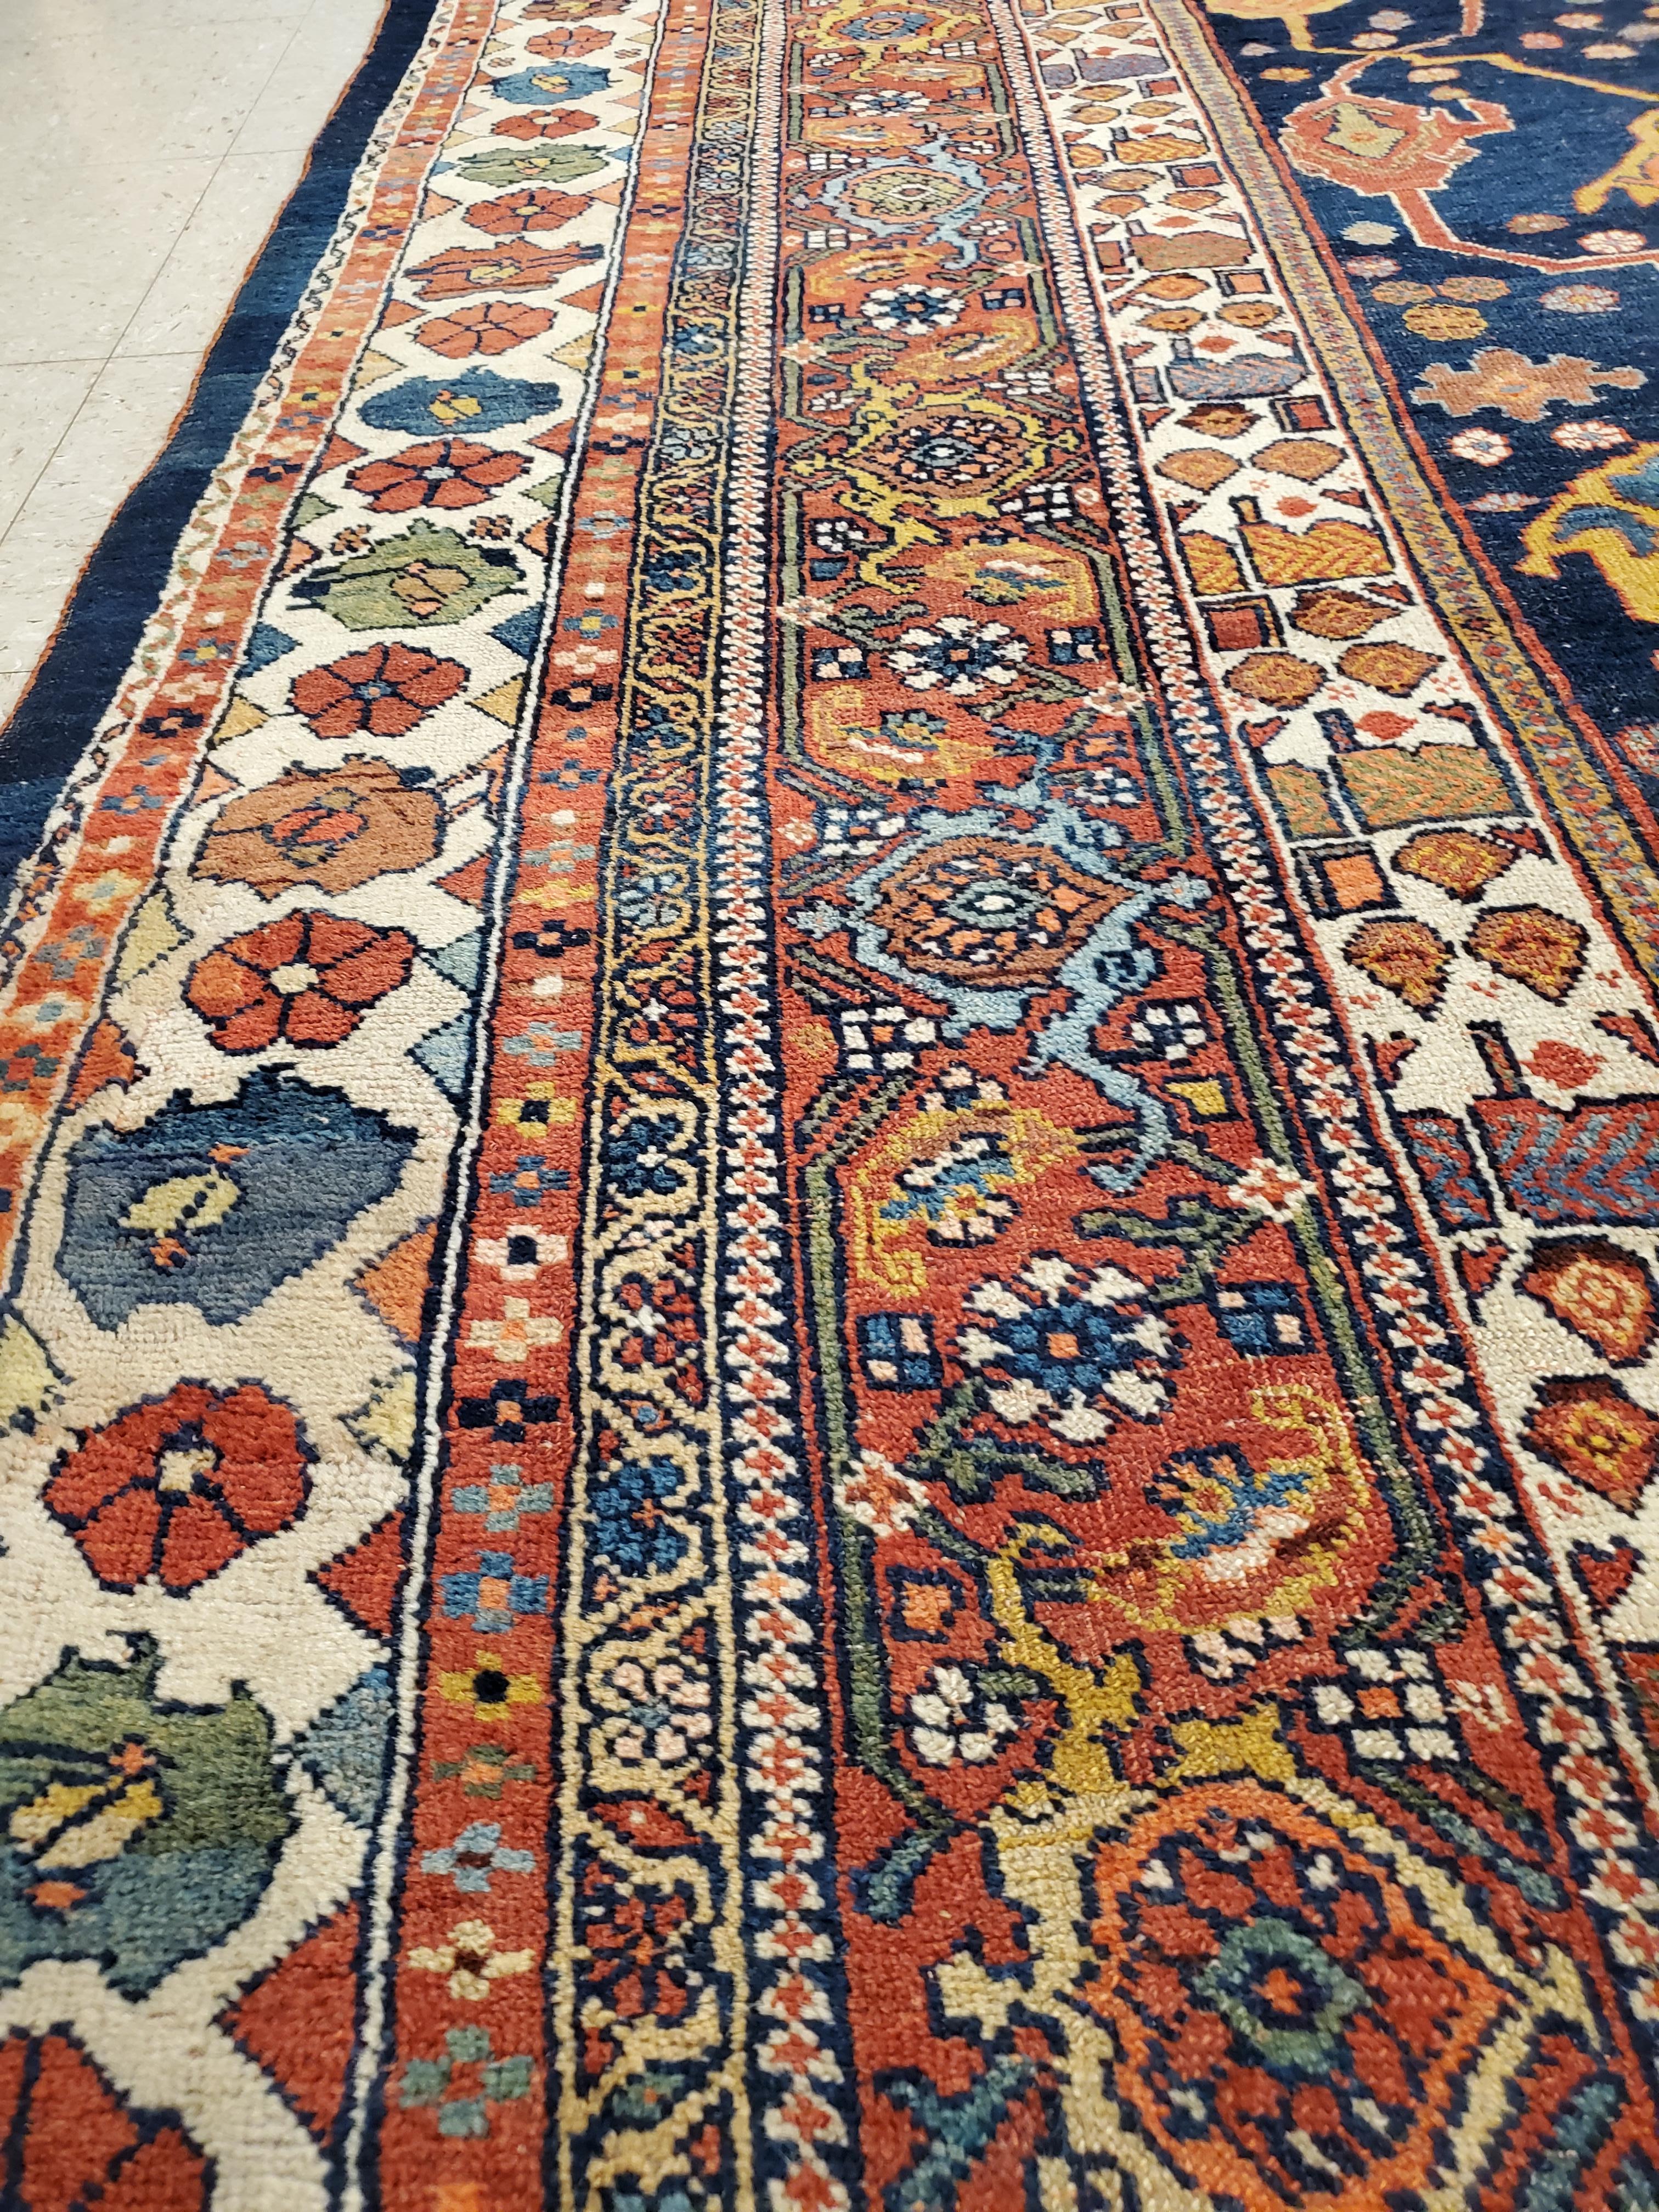 Hand-Knotted Antique Bijar Carpet Oriental Carpet, Handmade, Navy, Red, Light Blue and Green For Sale